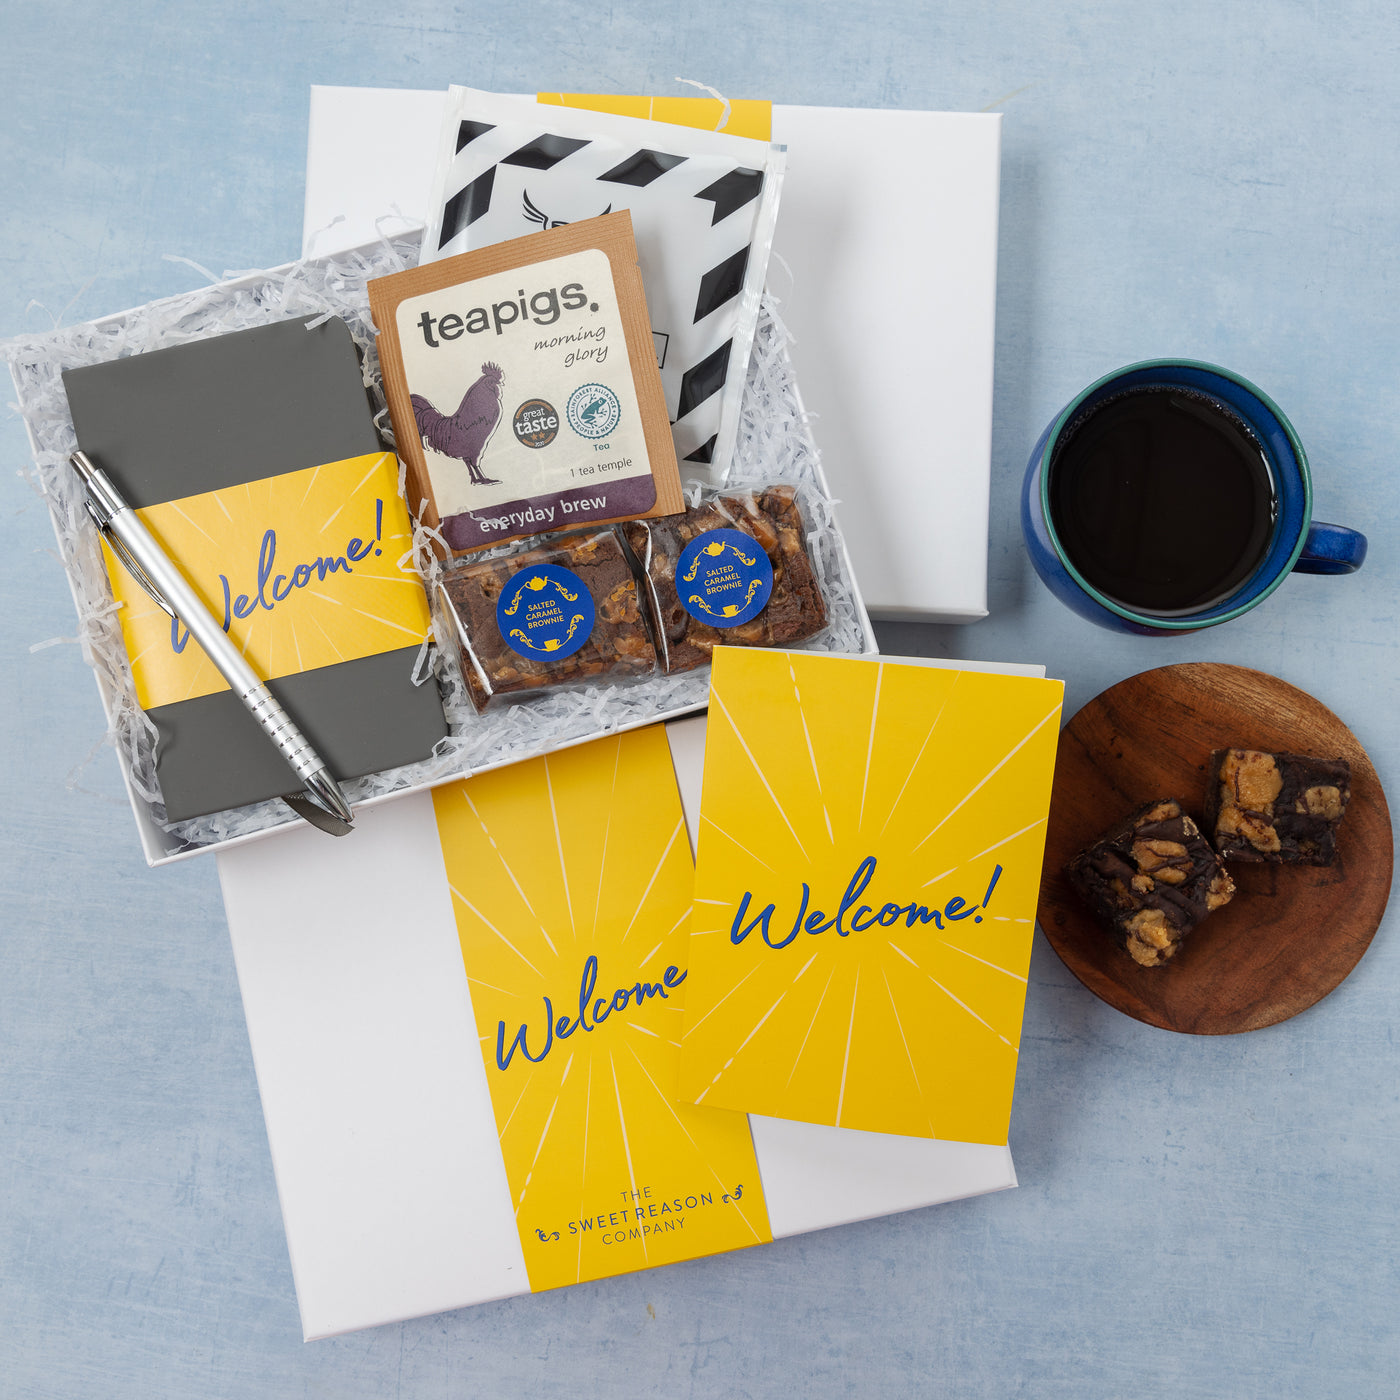 'Welcome!' Notebook, Brownies Tea & Coffee Gift